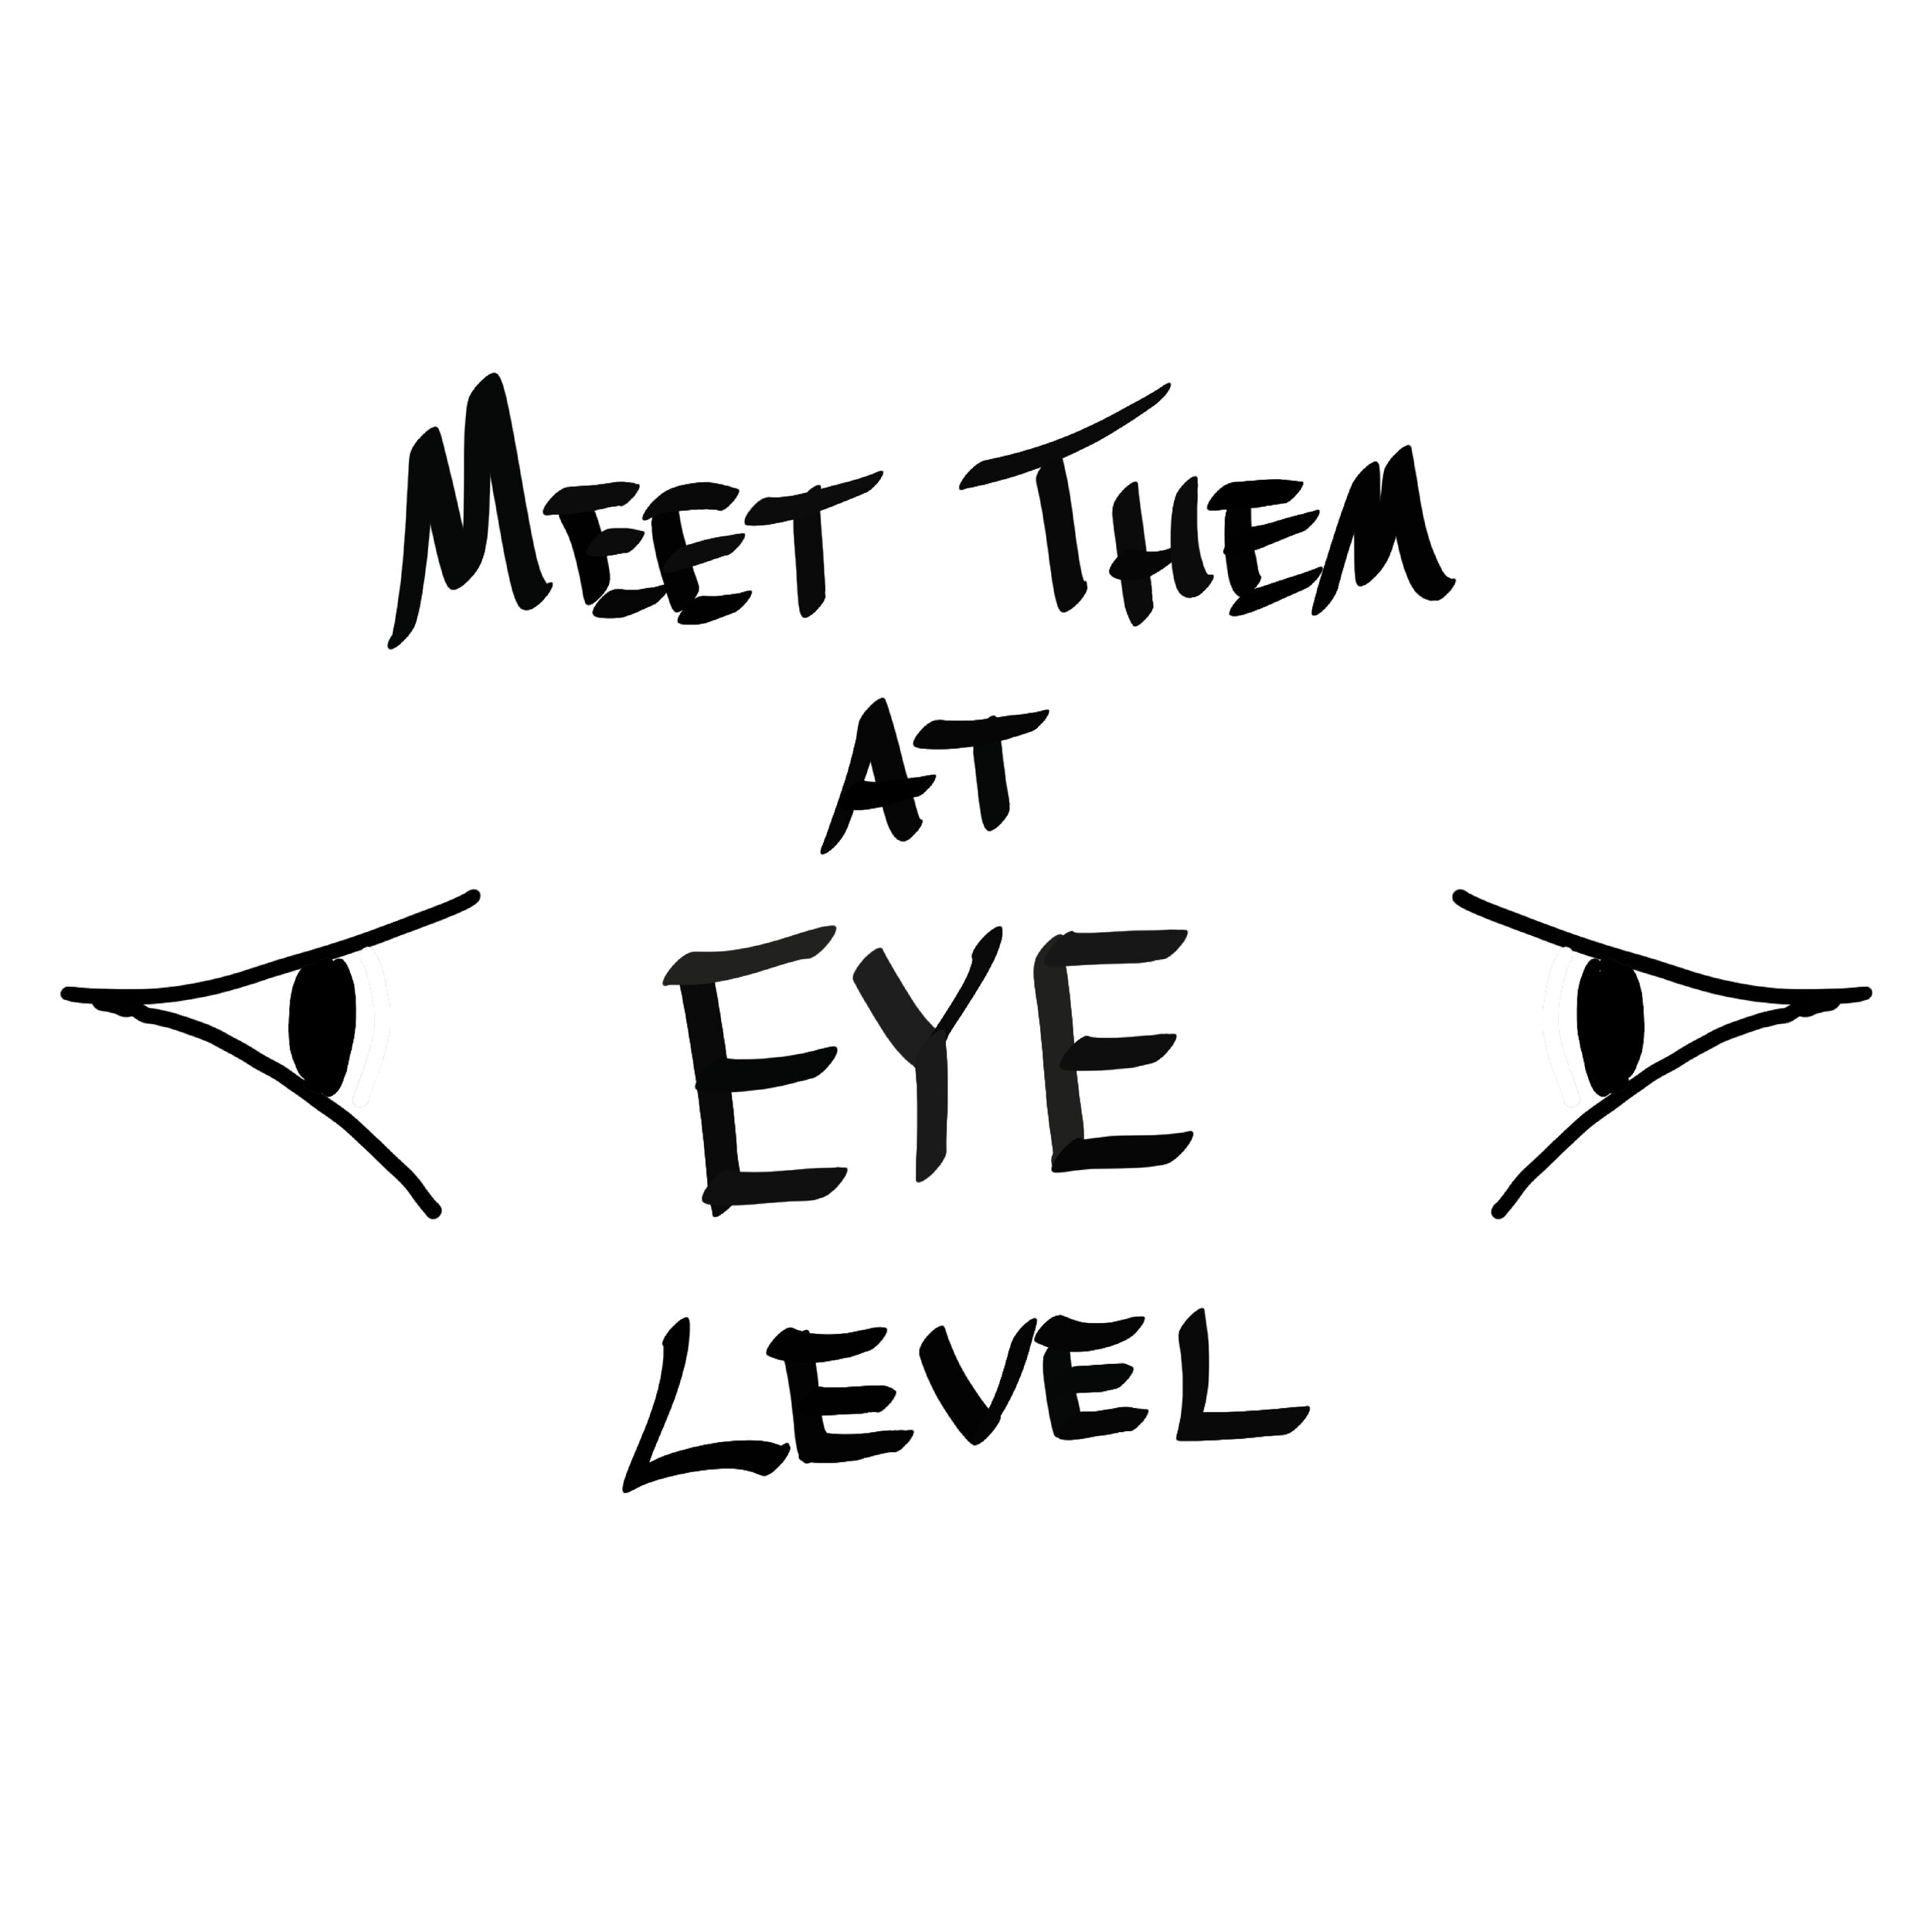 Meet them at eye level (1).jpg